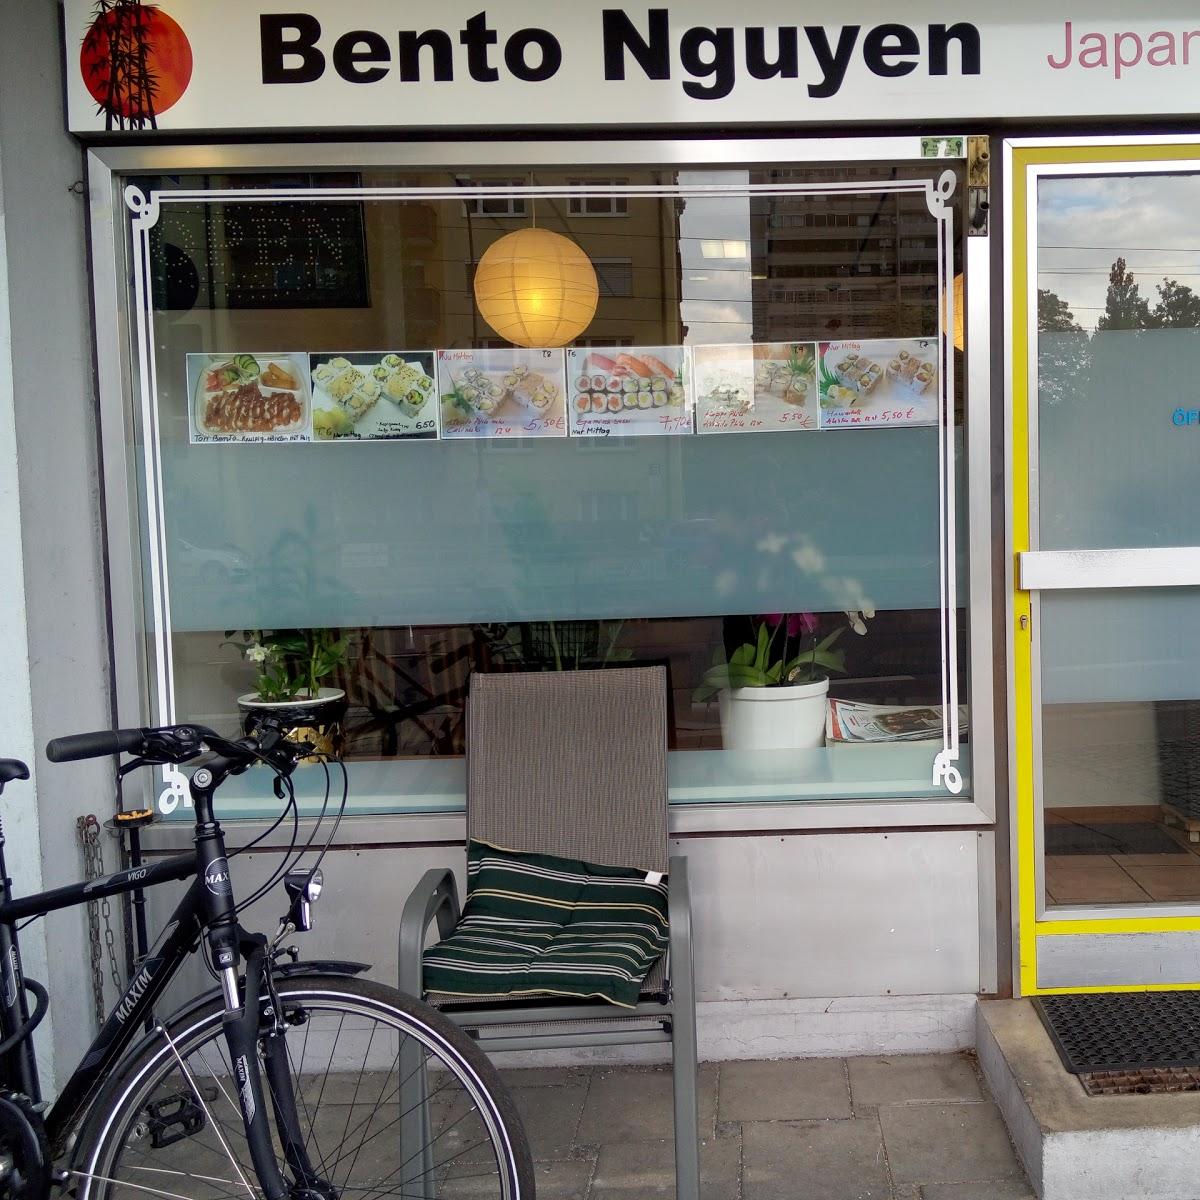 Restaurant "Bento Nguyen" in München